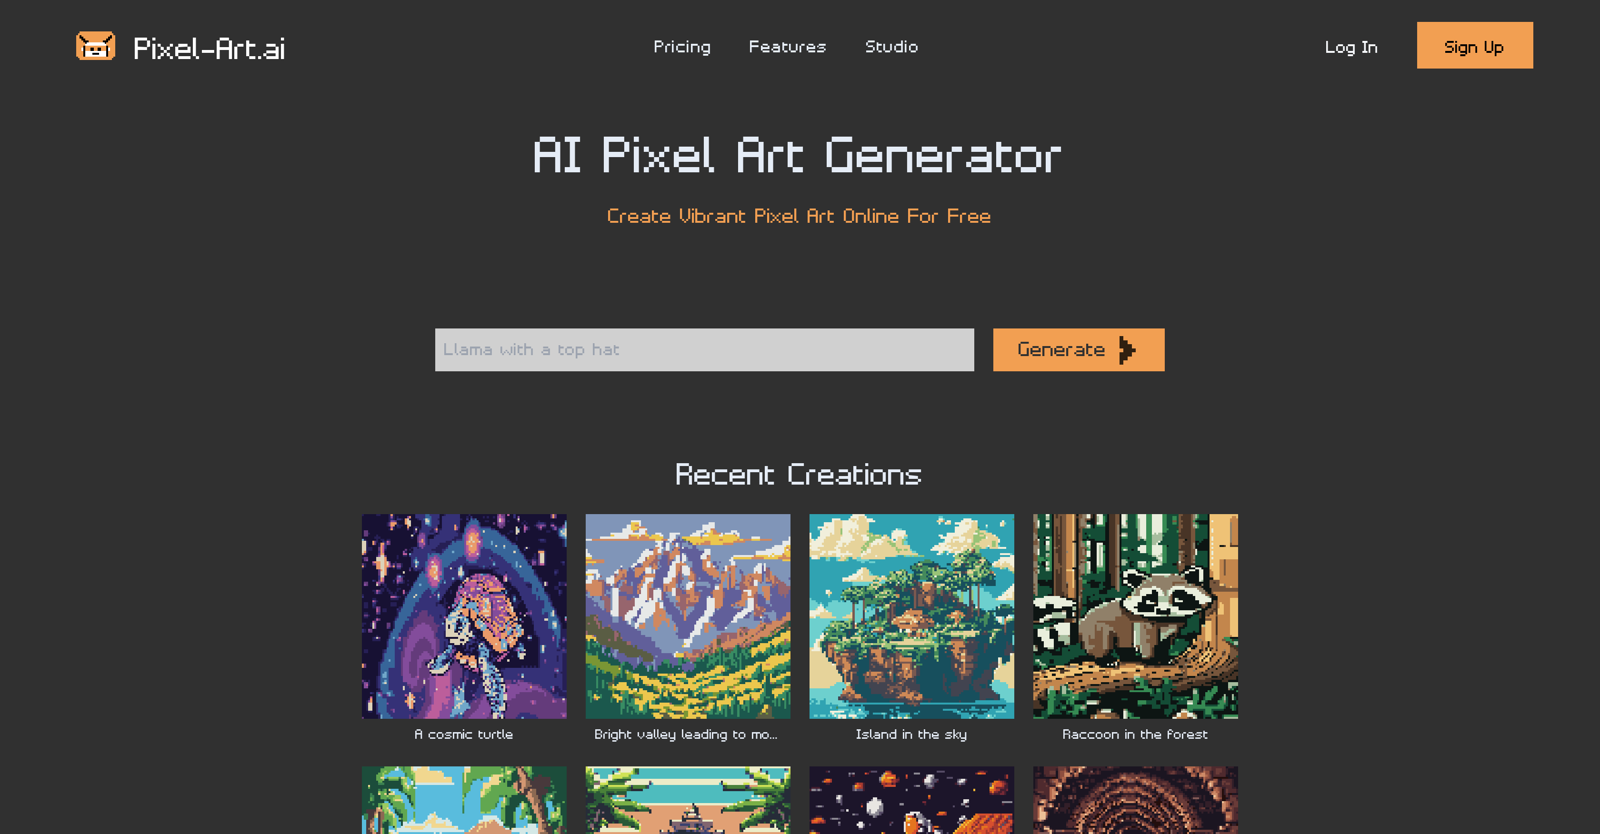 Pixel-Art.ai website